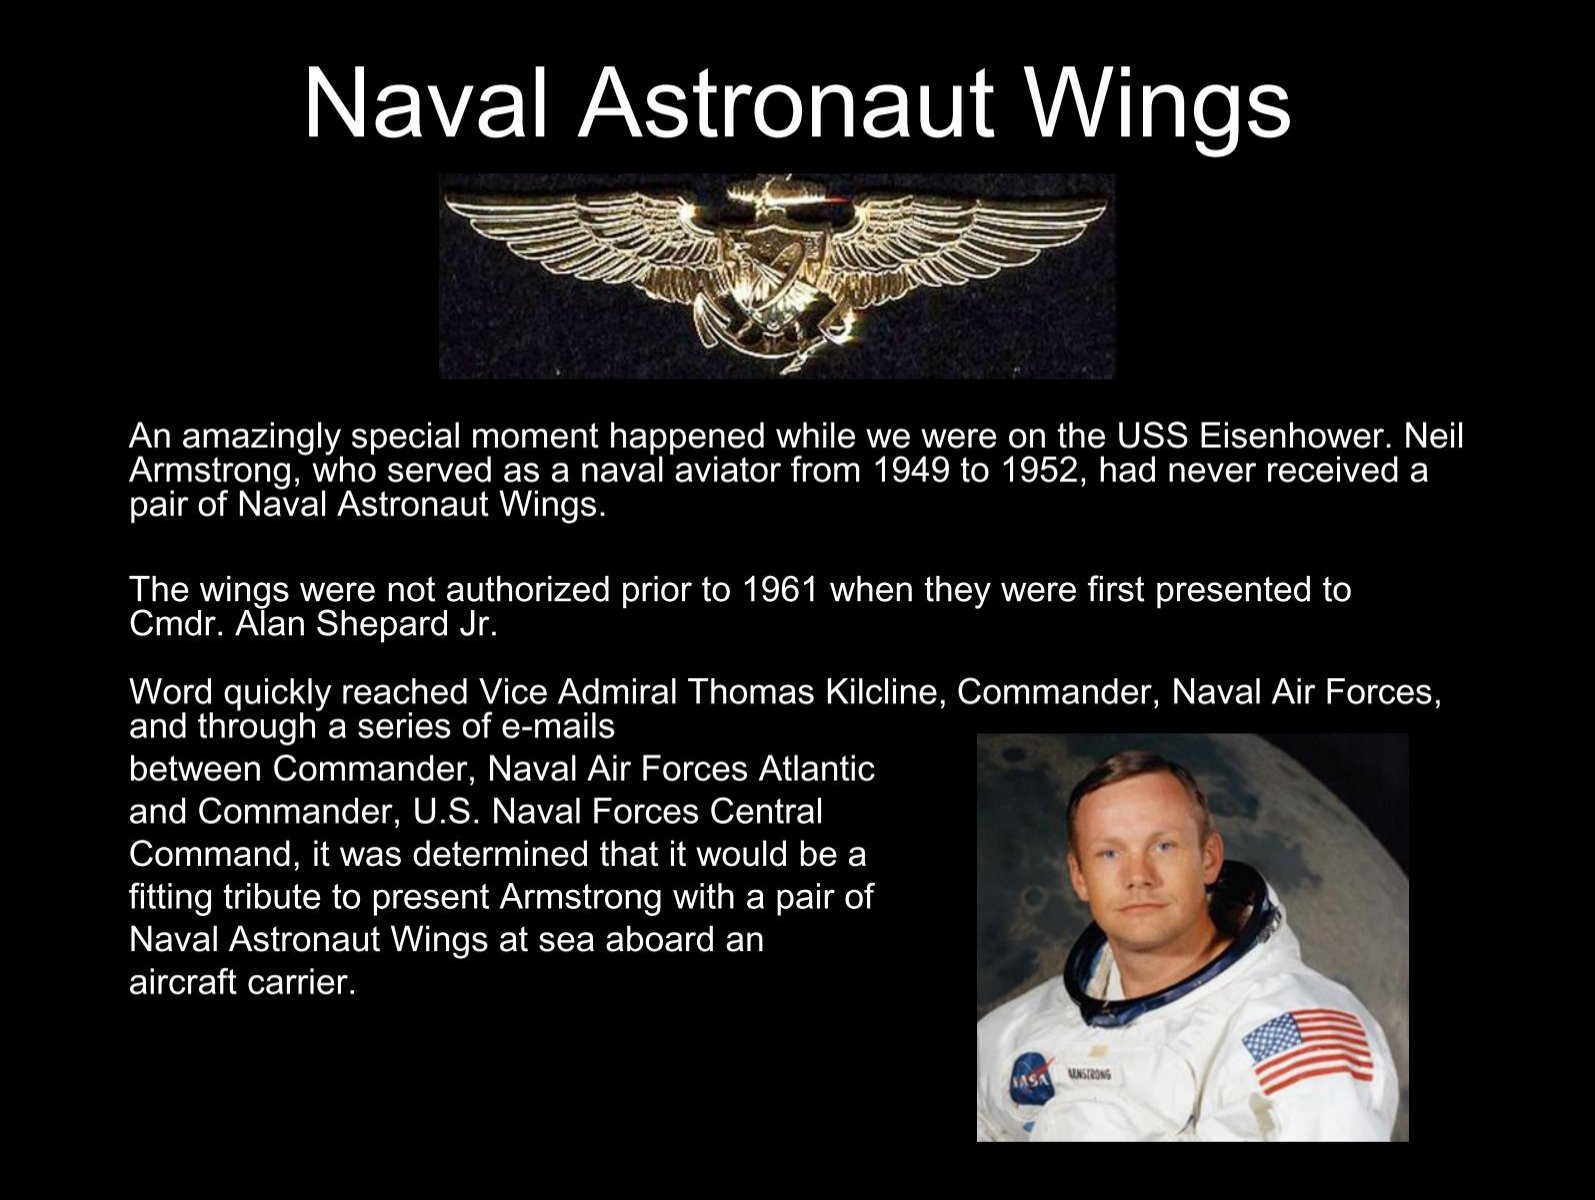 naval astronaut